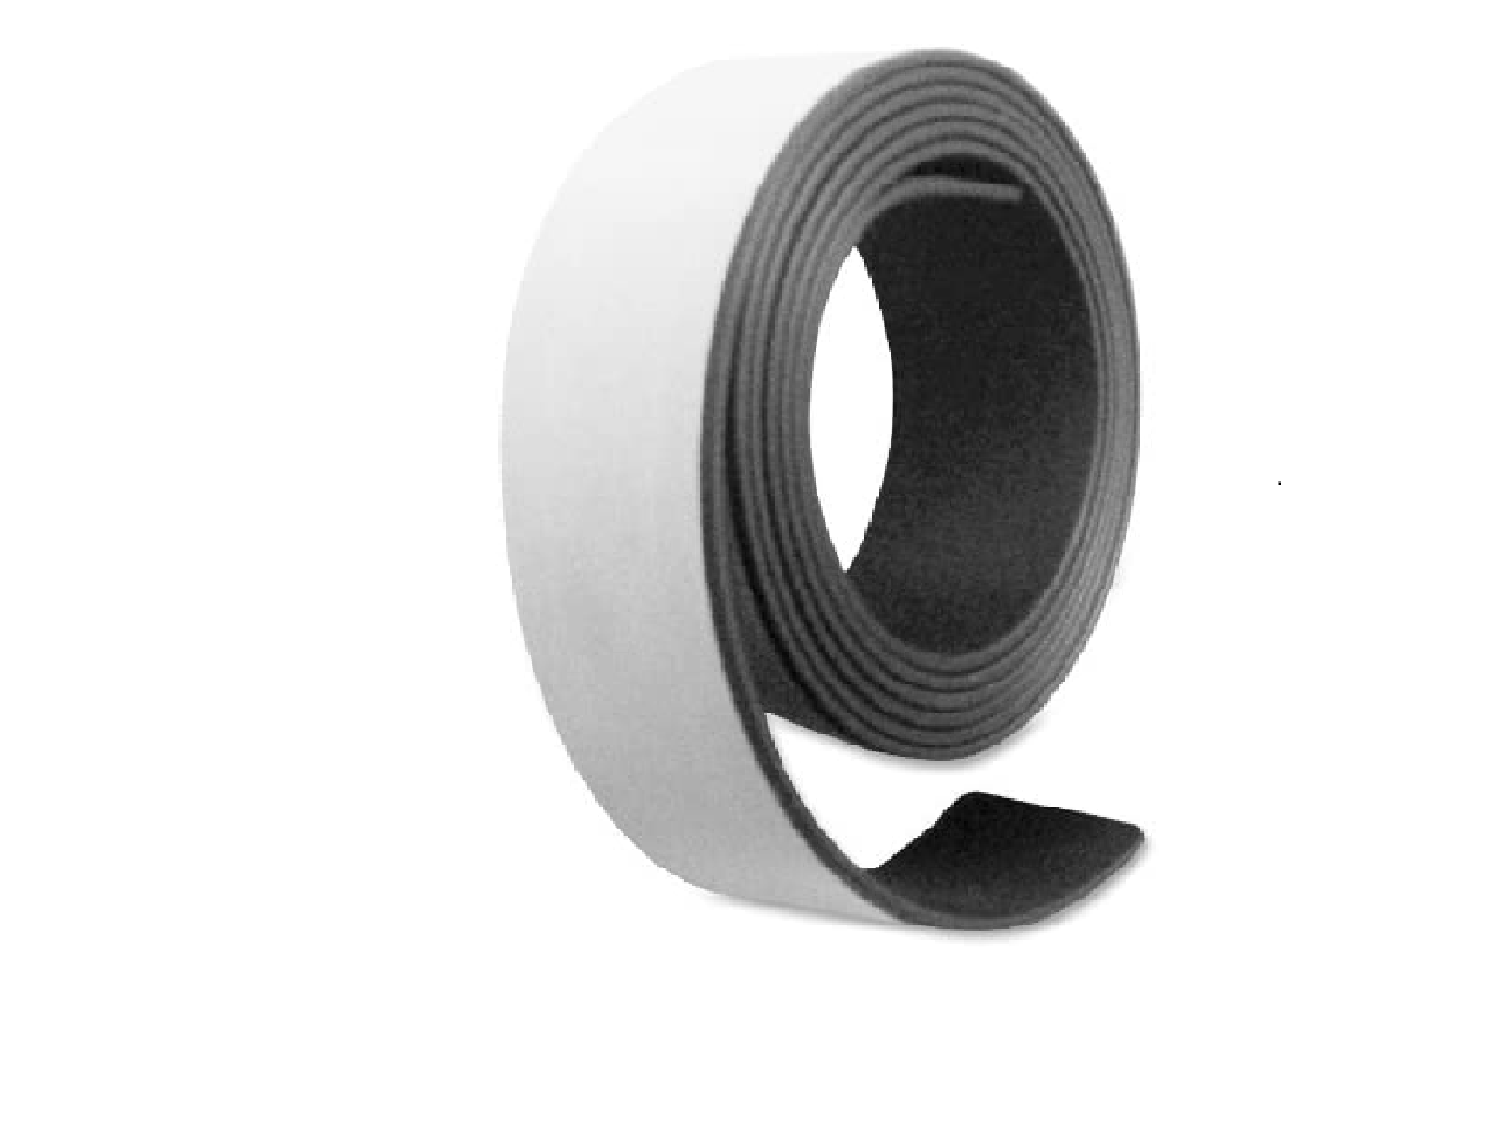 Baumgartens Adhesive-Backed Magnetic Tape, 0.5 x 10 ft, Black